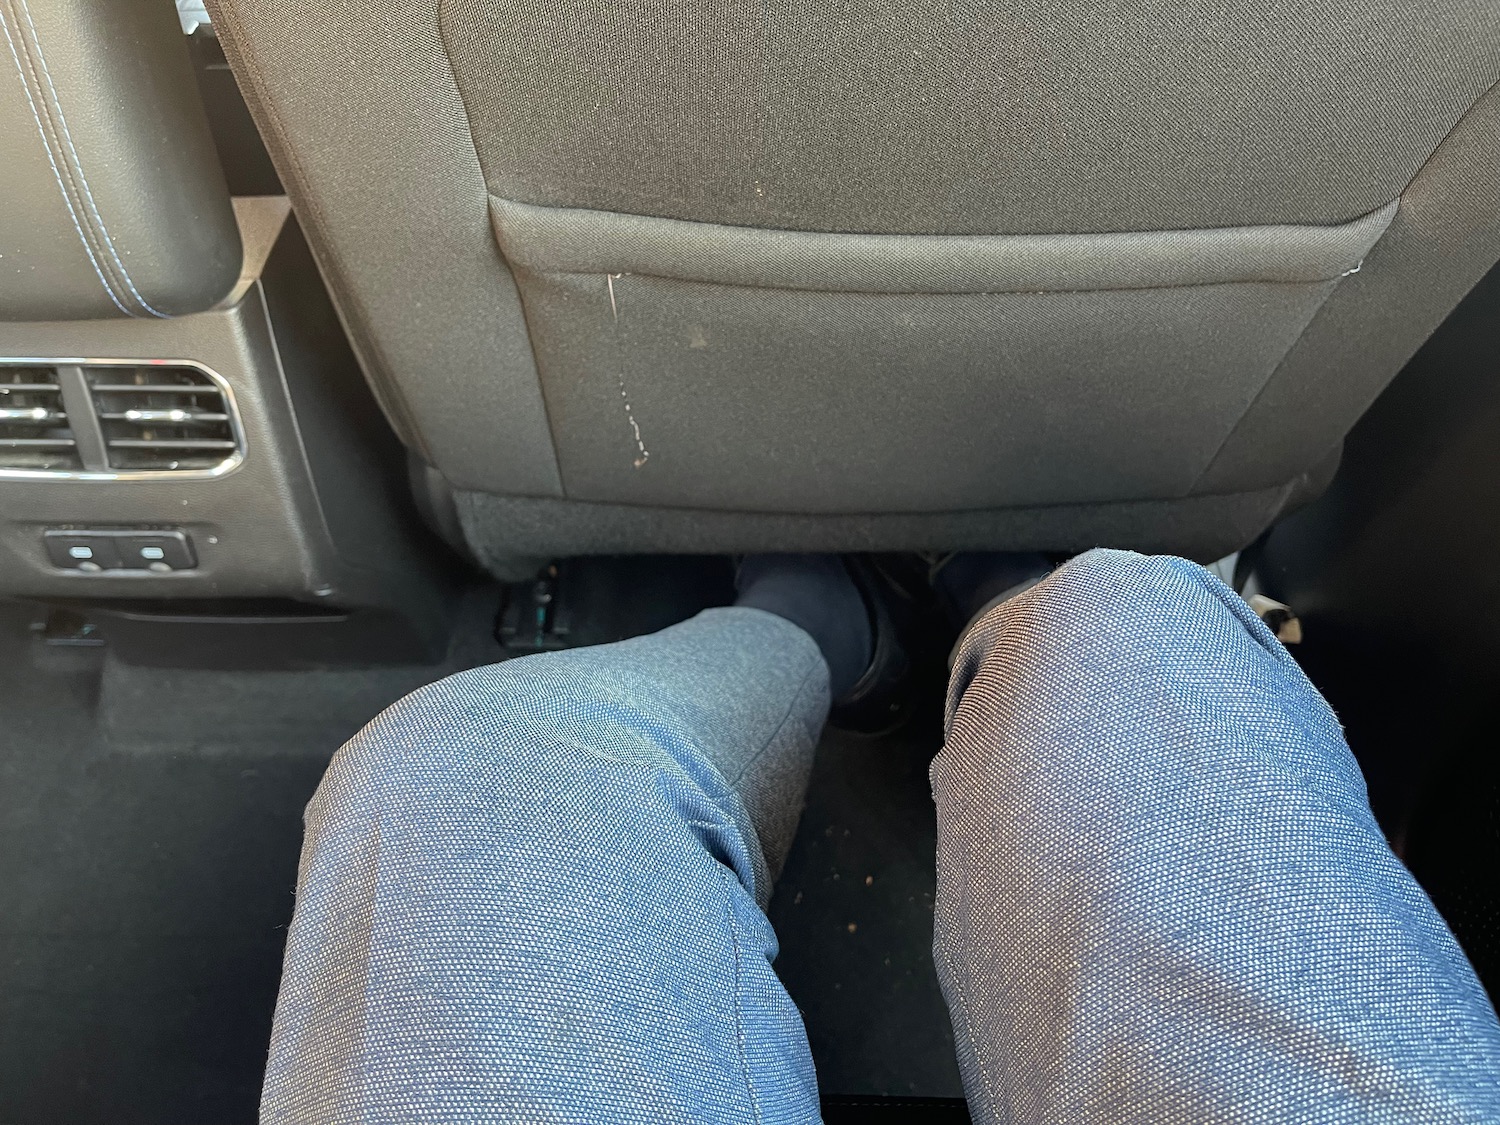 a person's legs in a car